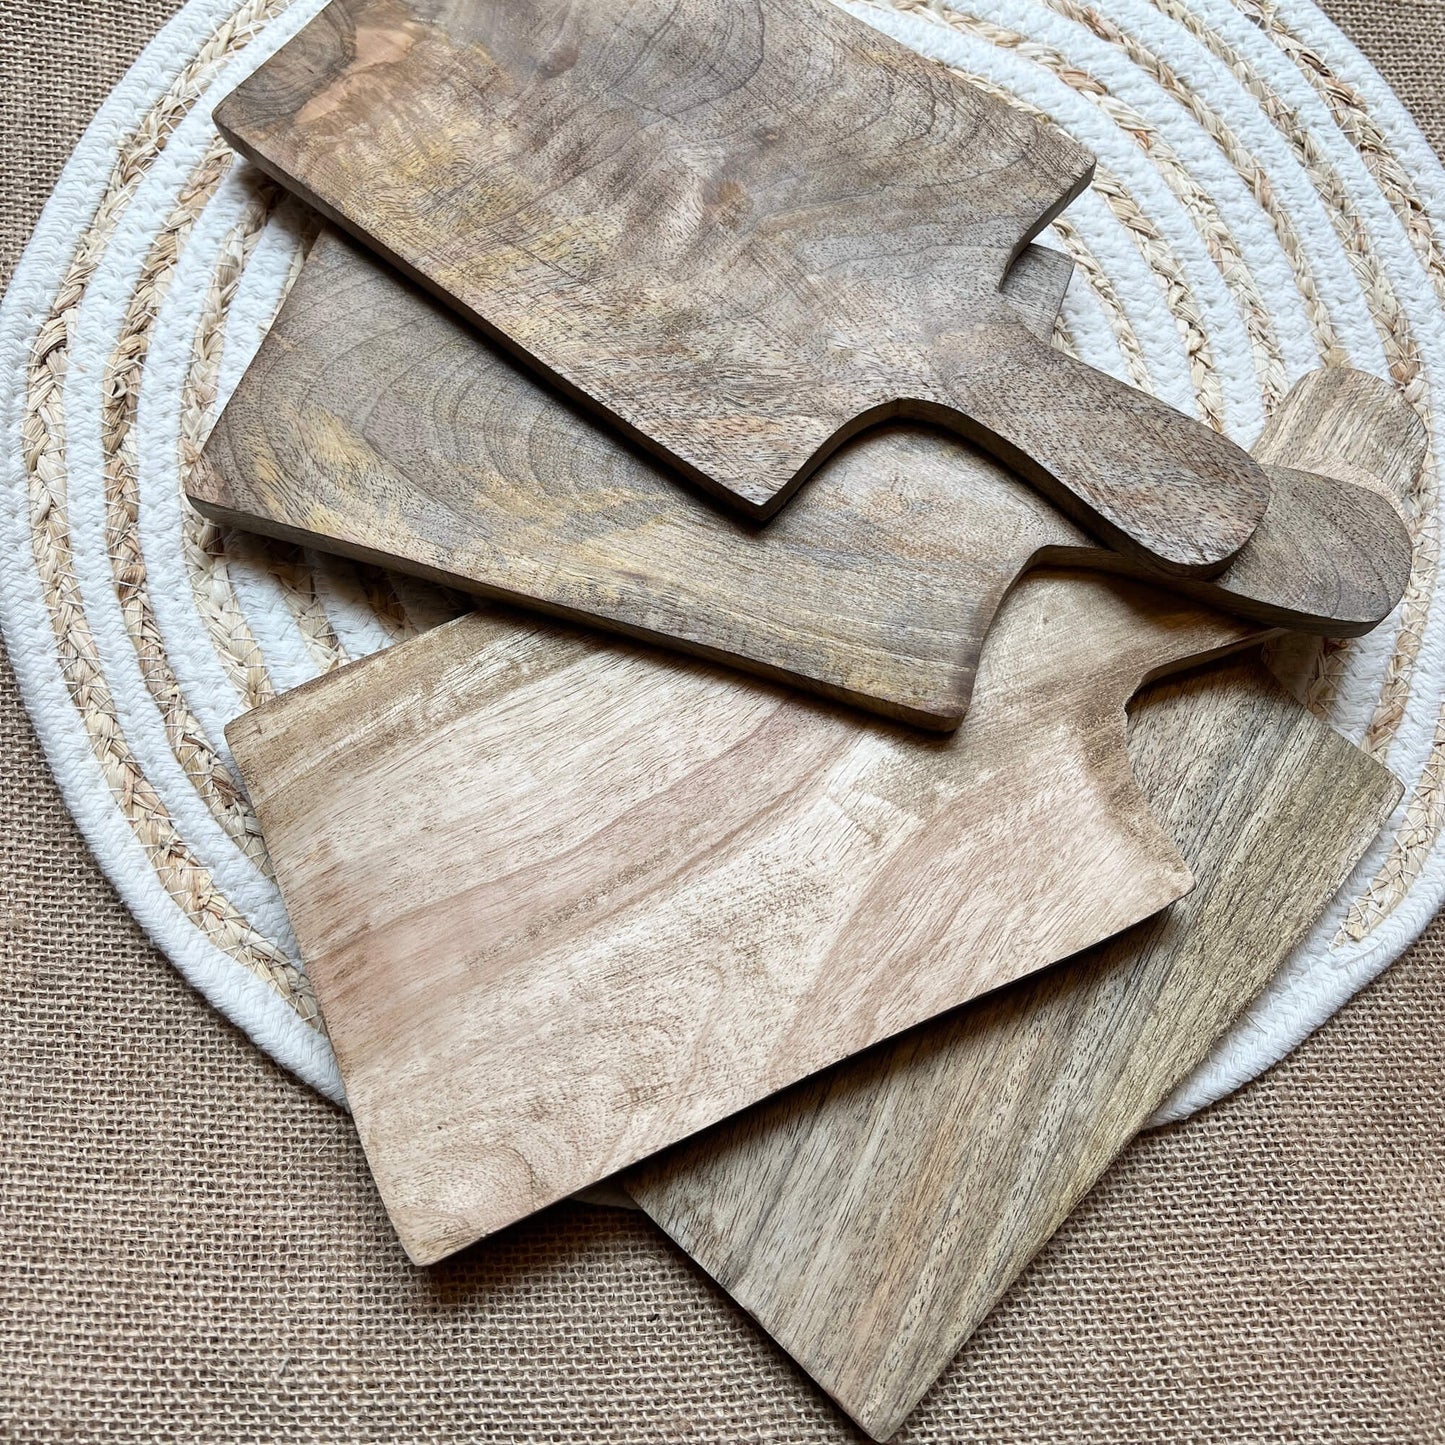 Small cutting board - mango wood